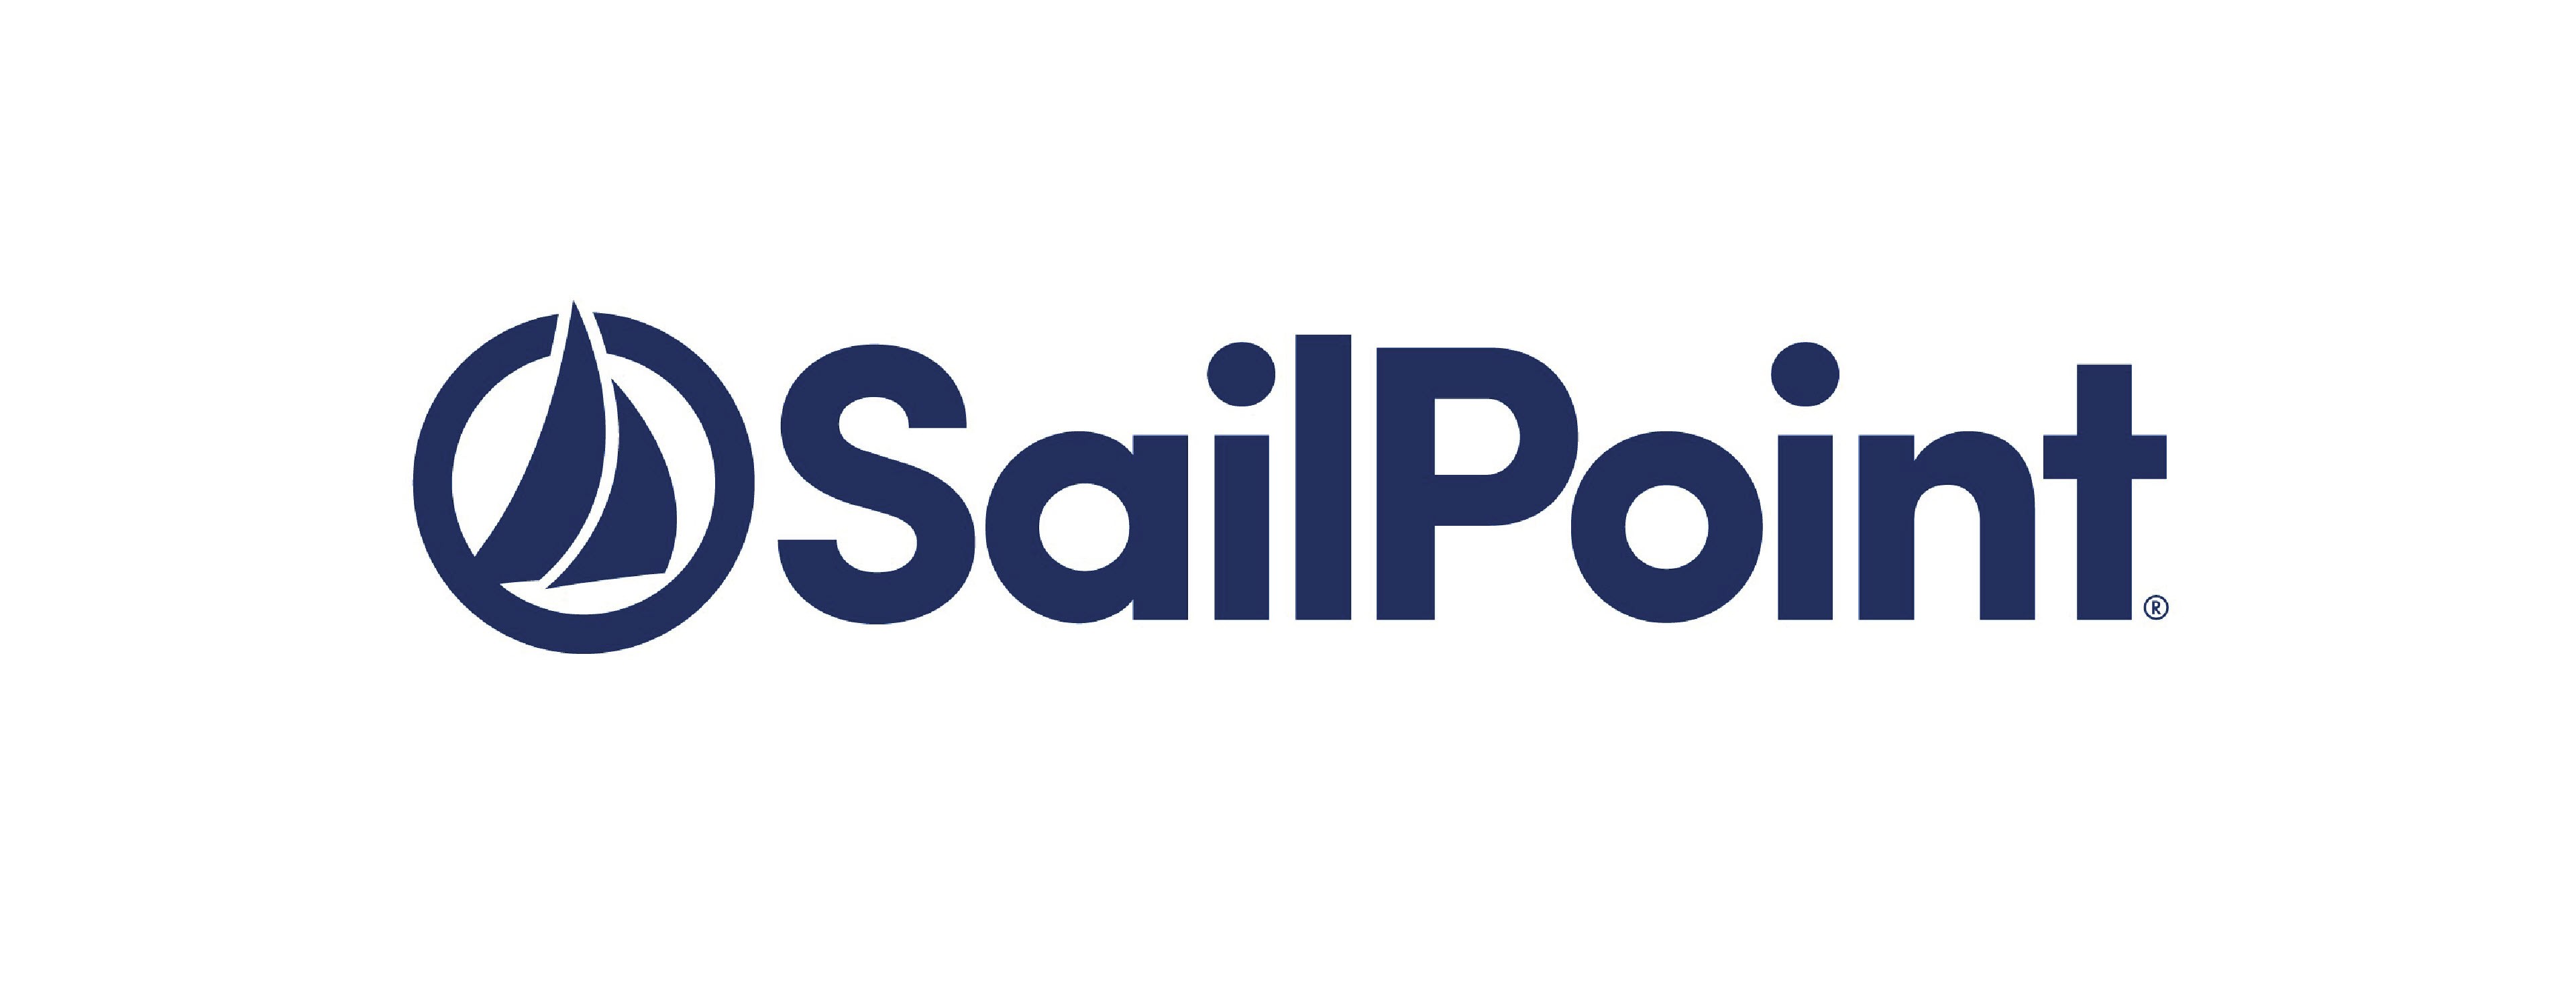             Logo Sail Point        